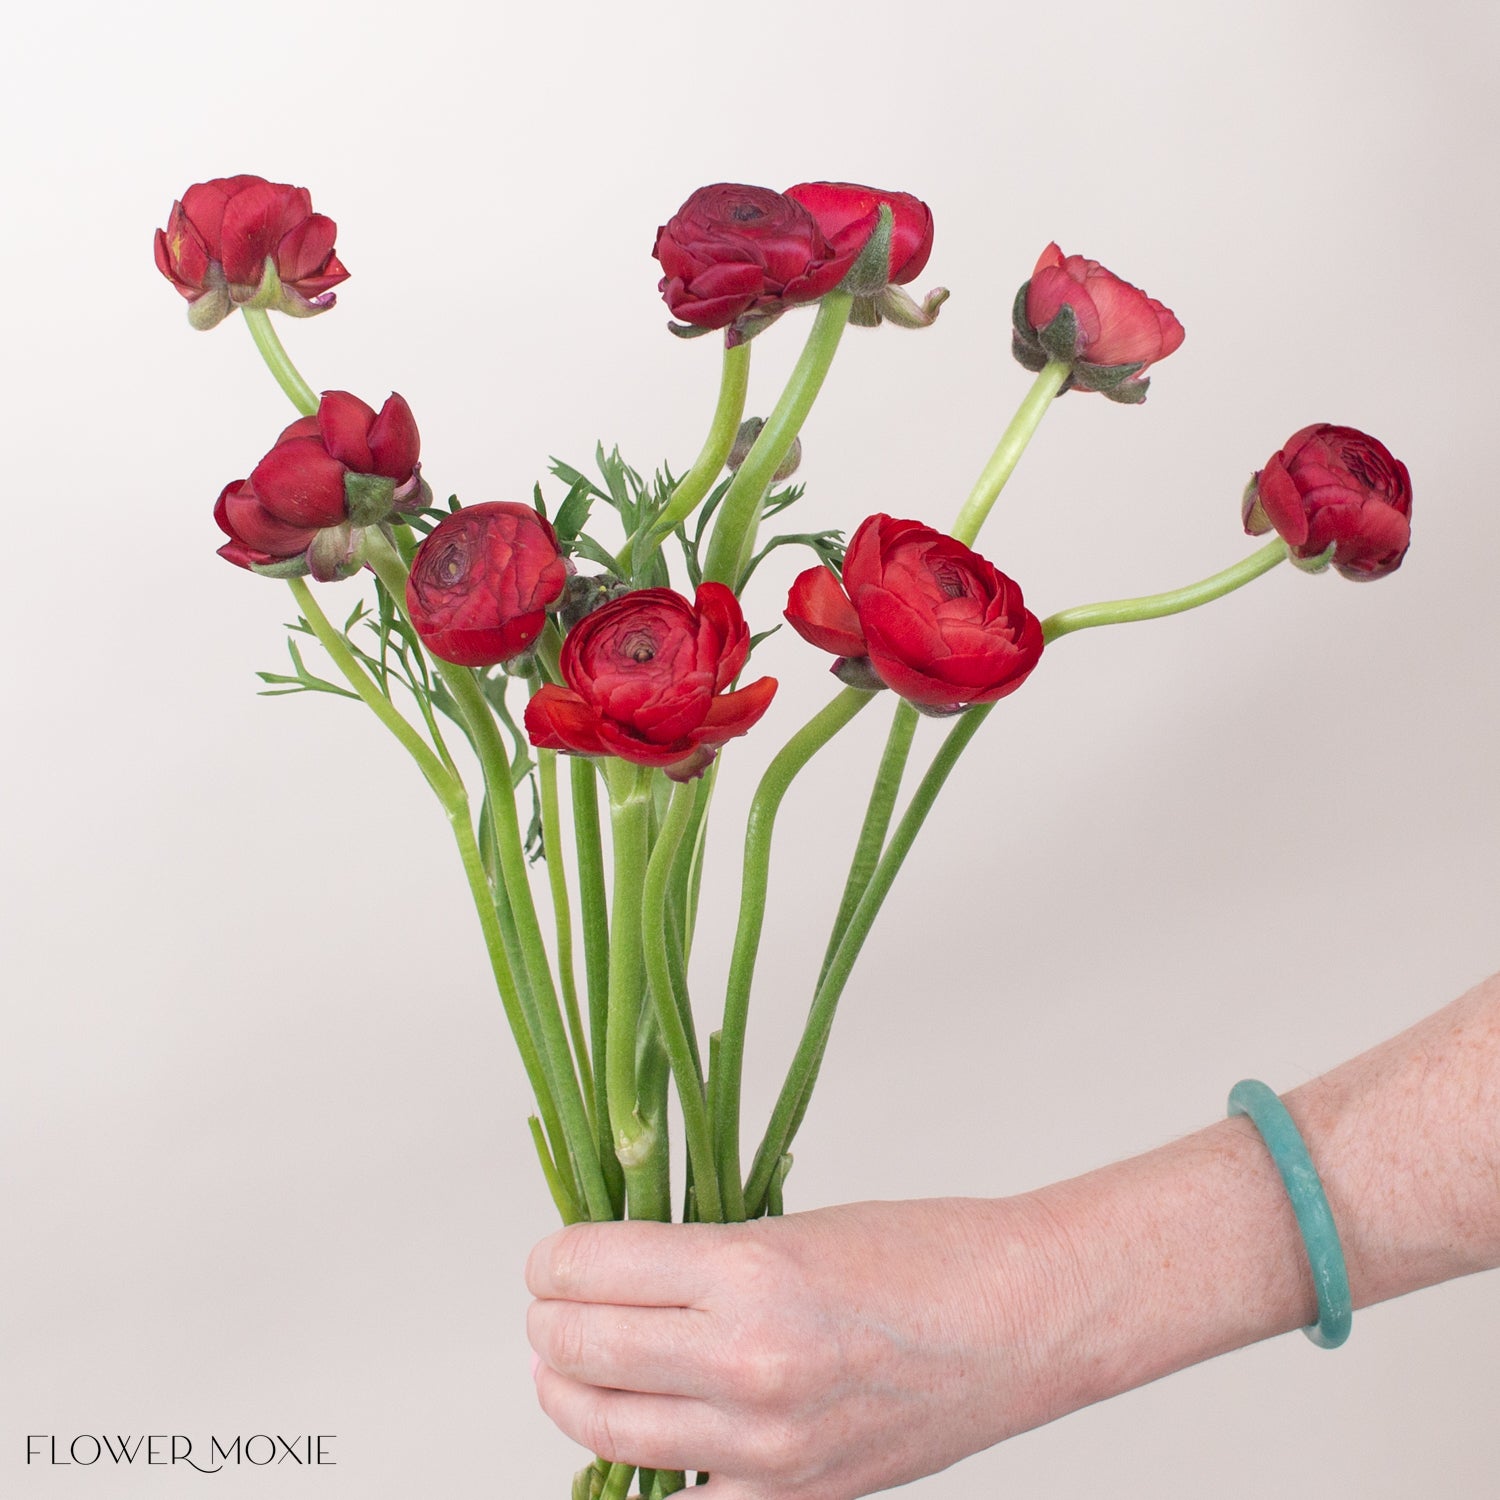 red ranunculus flower